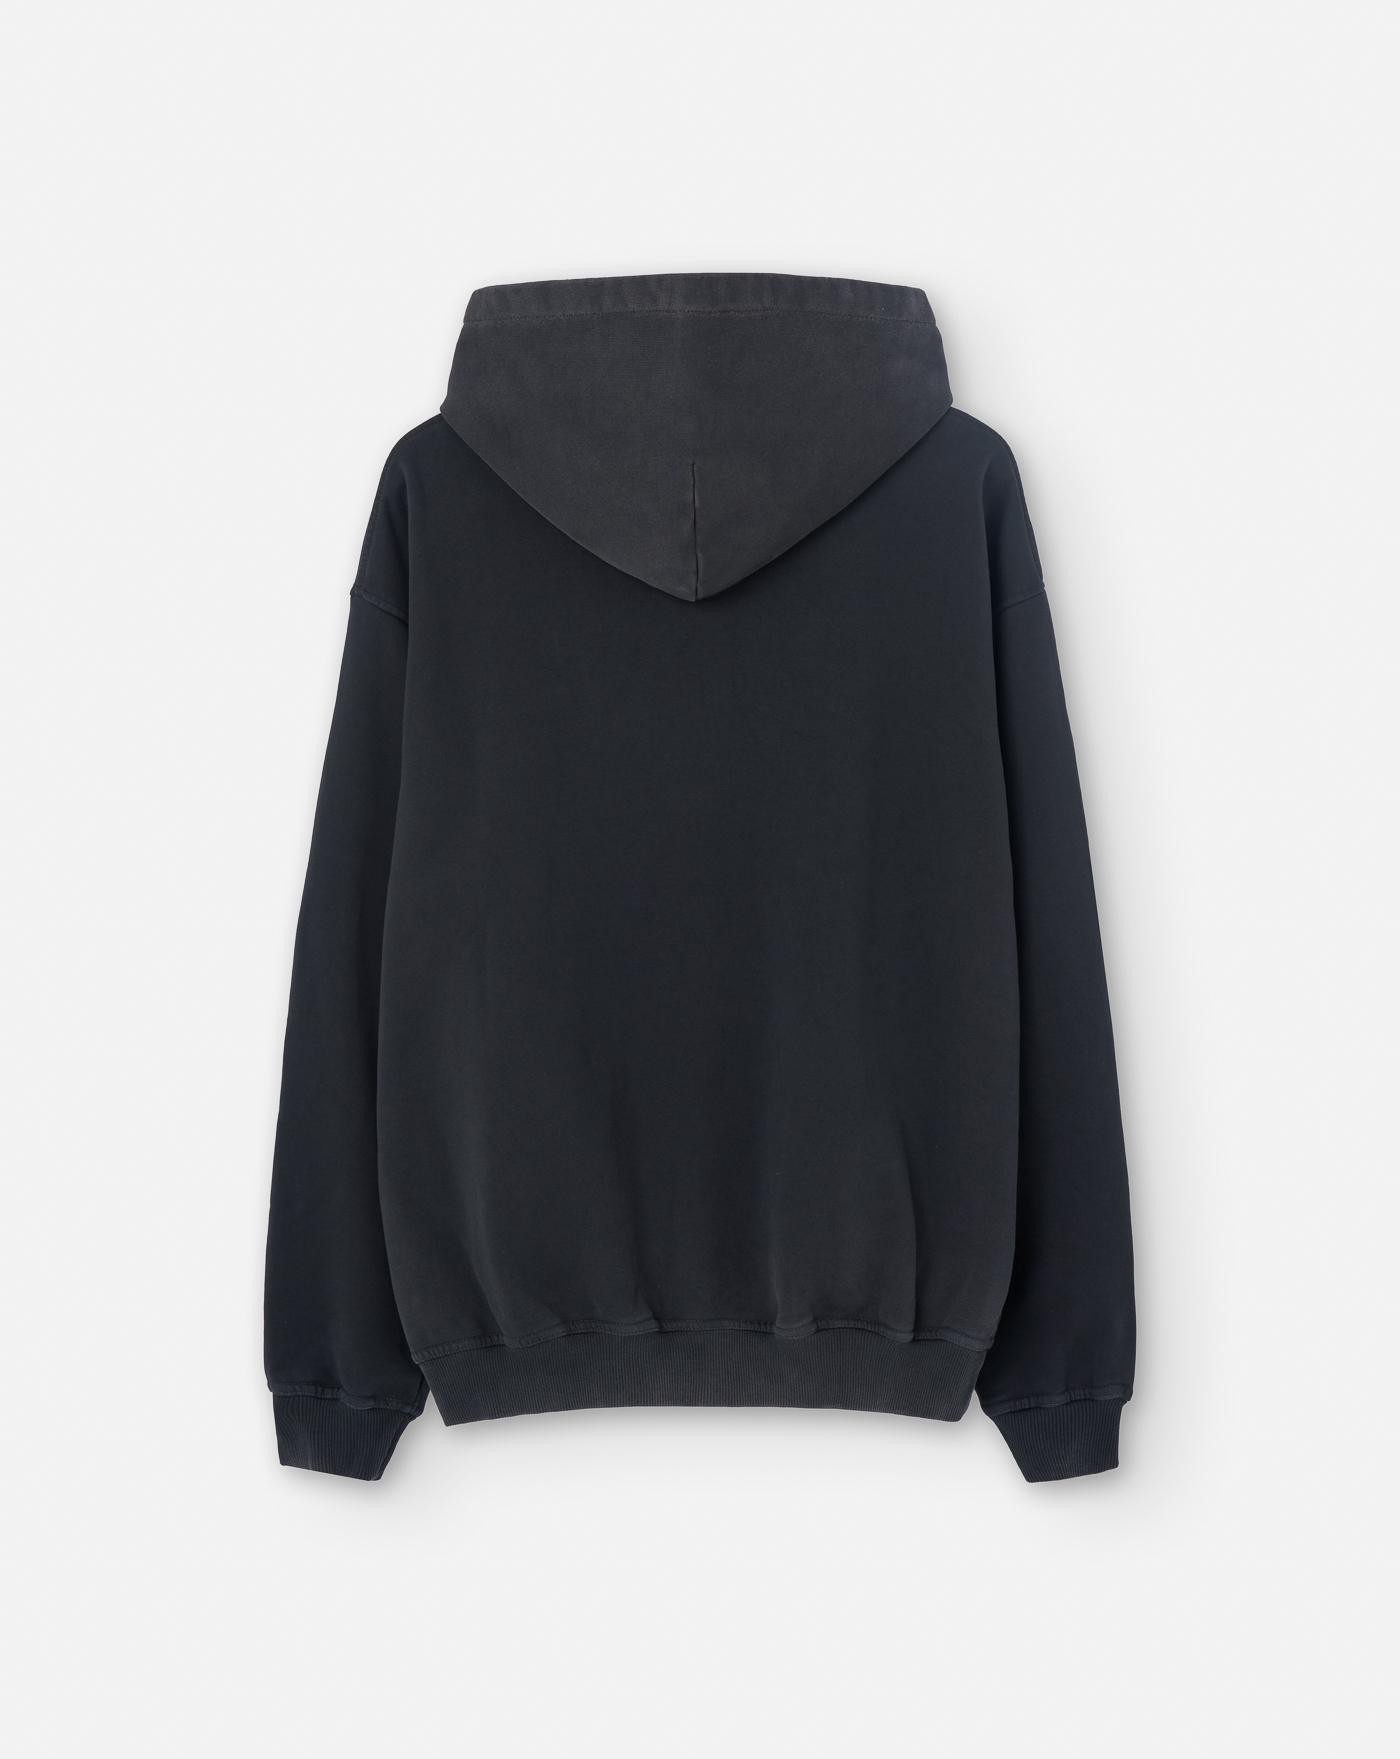 represent-sudadera-hoodie-throughbred-doberman-sweatshirt-black-negra-2